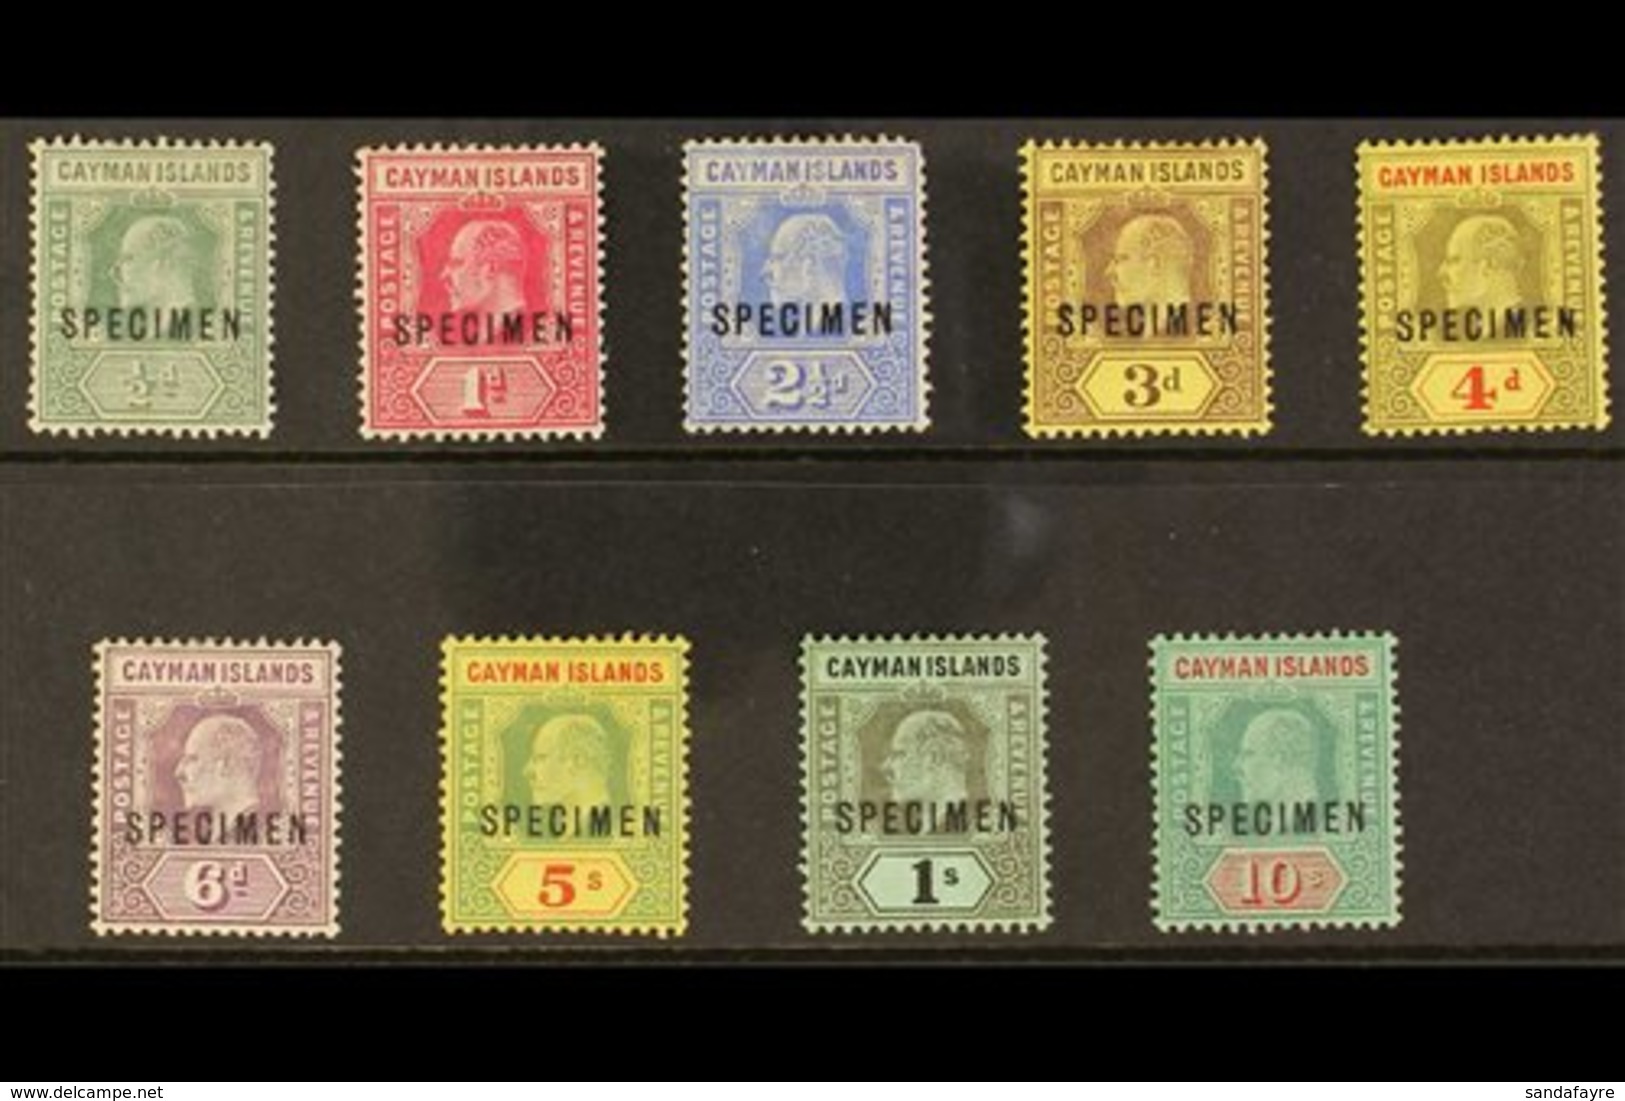 1907-09  KEVII Overprinted "SPECIMEN" Complete Set, SG 25s/30s And 32s/34s, Fine Mint. (9 Stamps) For More Images, Pleas - Iles Caïmans